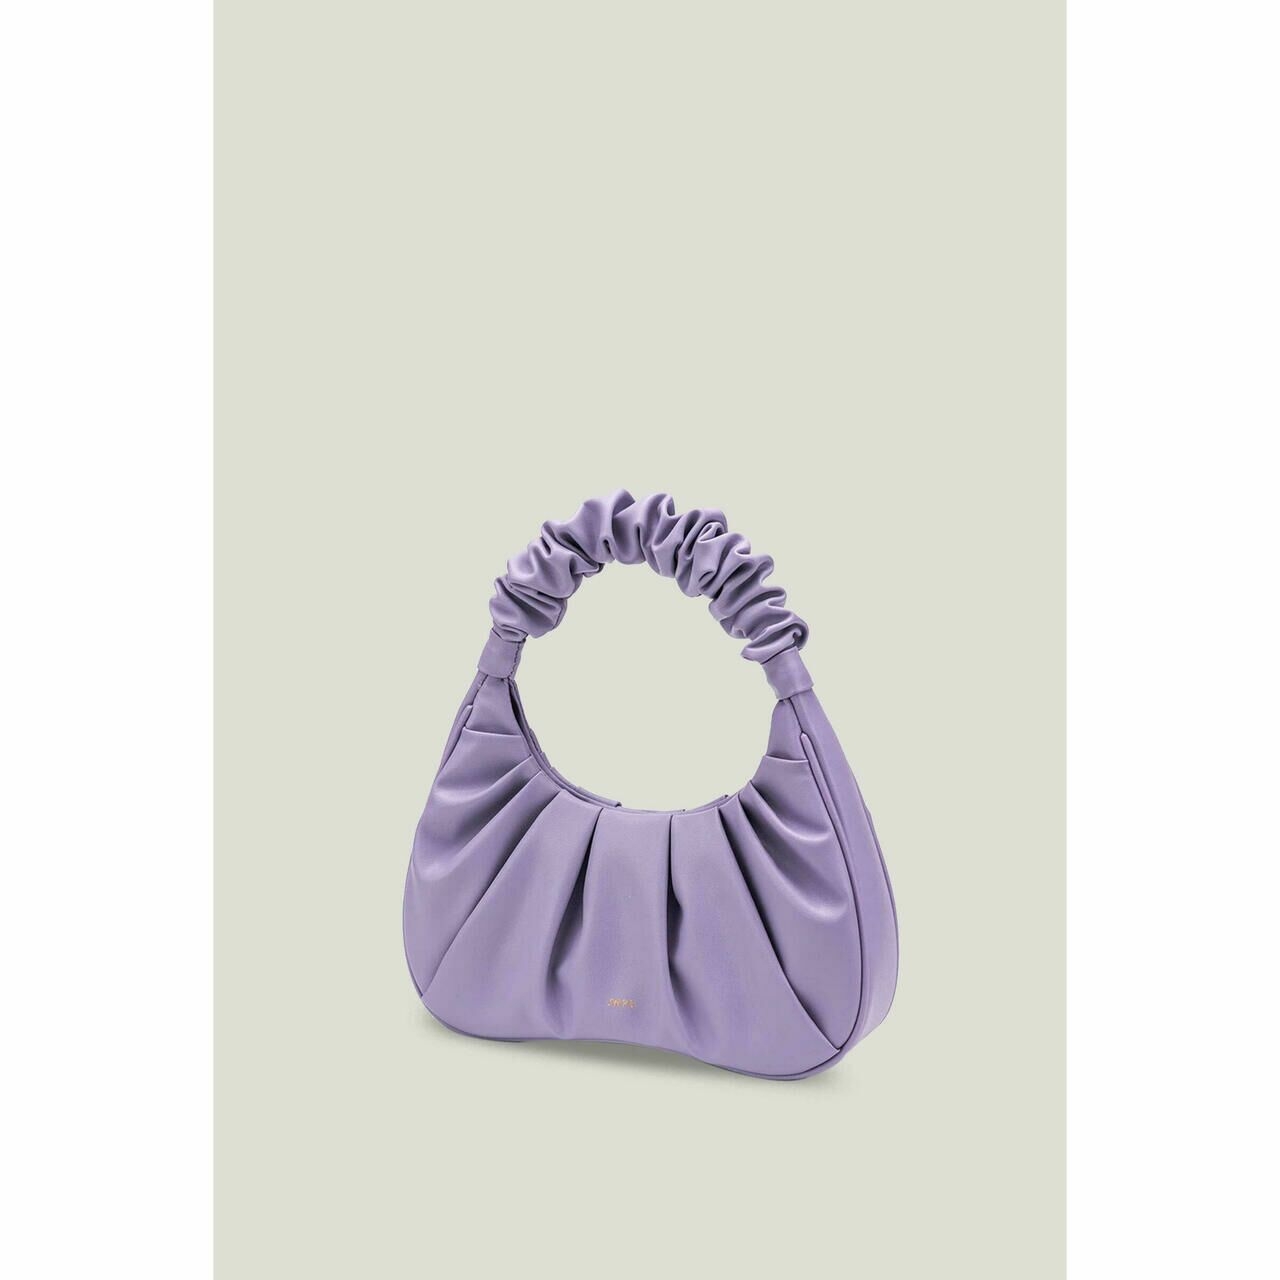 Jw pei Purple Shoulder Bag